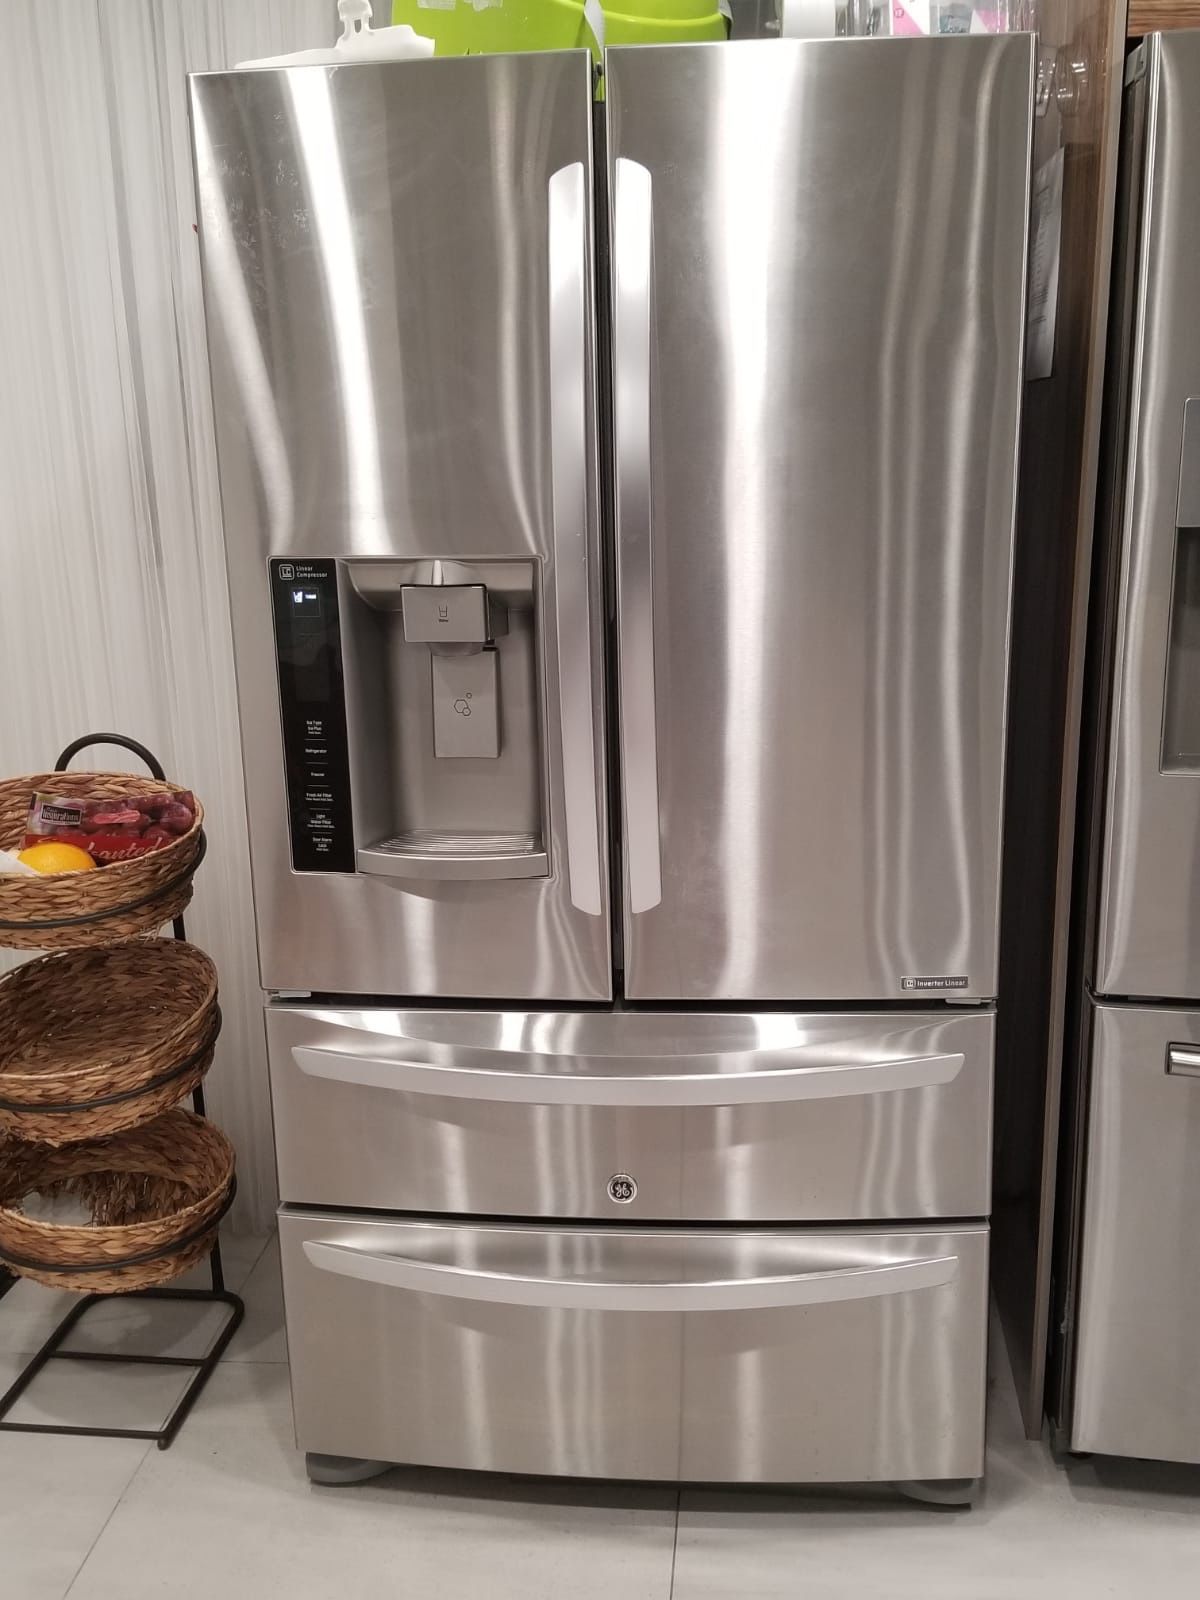 GL Refrigerator freezer stainless steel 27 cu. ft